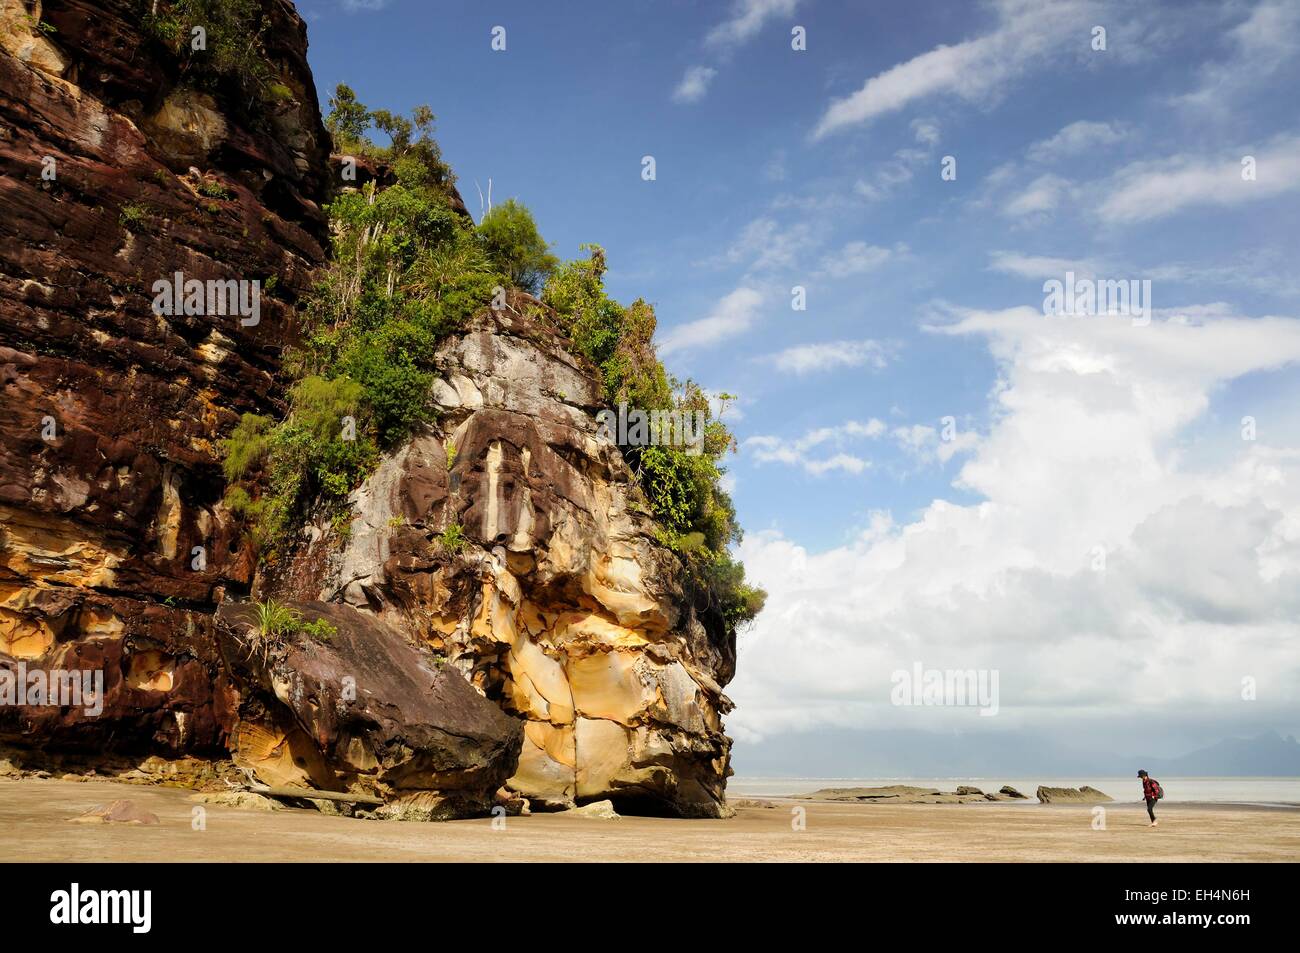 Malaysia, Borneo, Sarawak, Bako National Park, woman walking on Telok Assam beach near a cliff and rocks Stock Photo